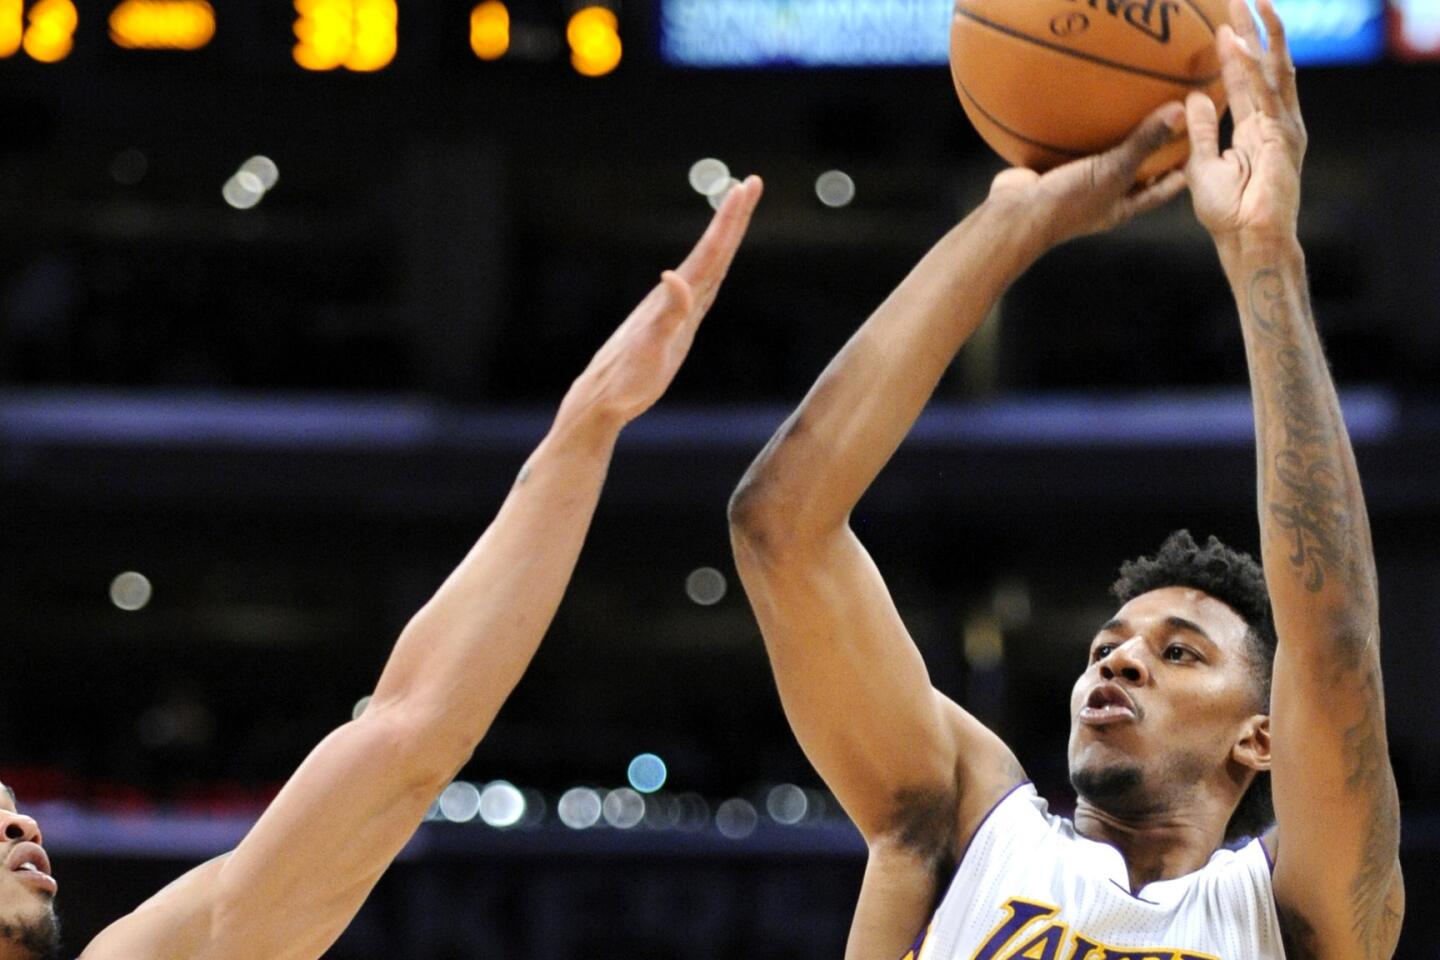 Gerald Green dunks over the Lakers' Jordan Hill